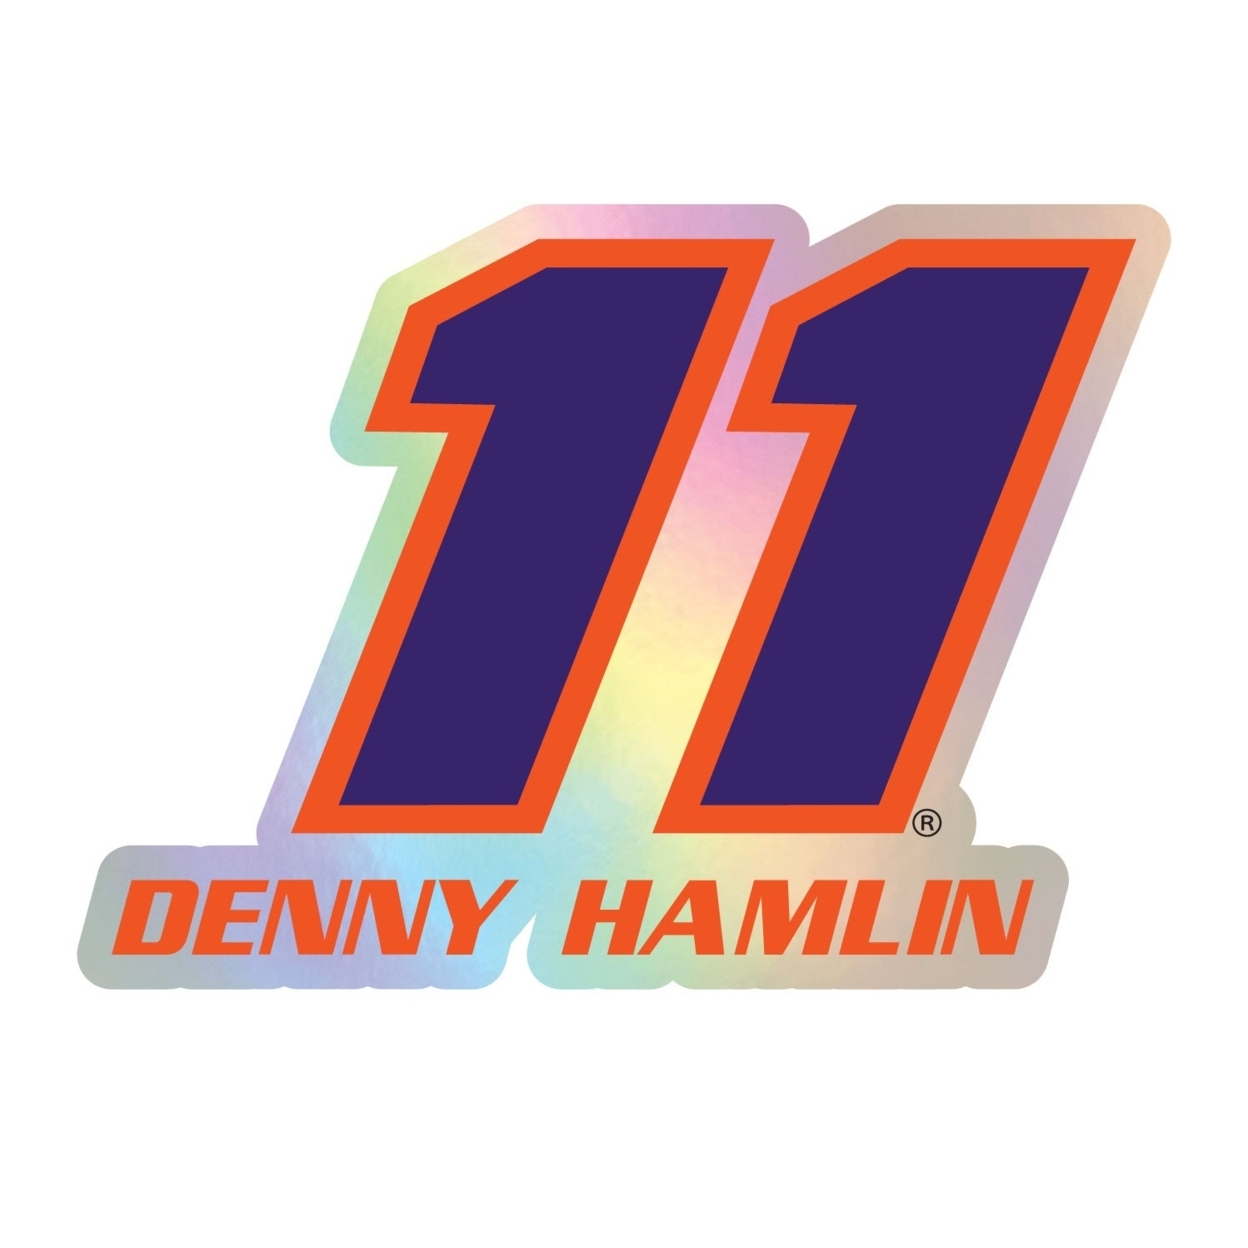 #11 Denny Hamlin Laser Cut Holographic Decal - 4-Inch